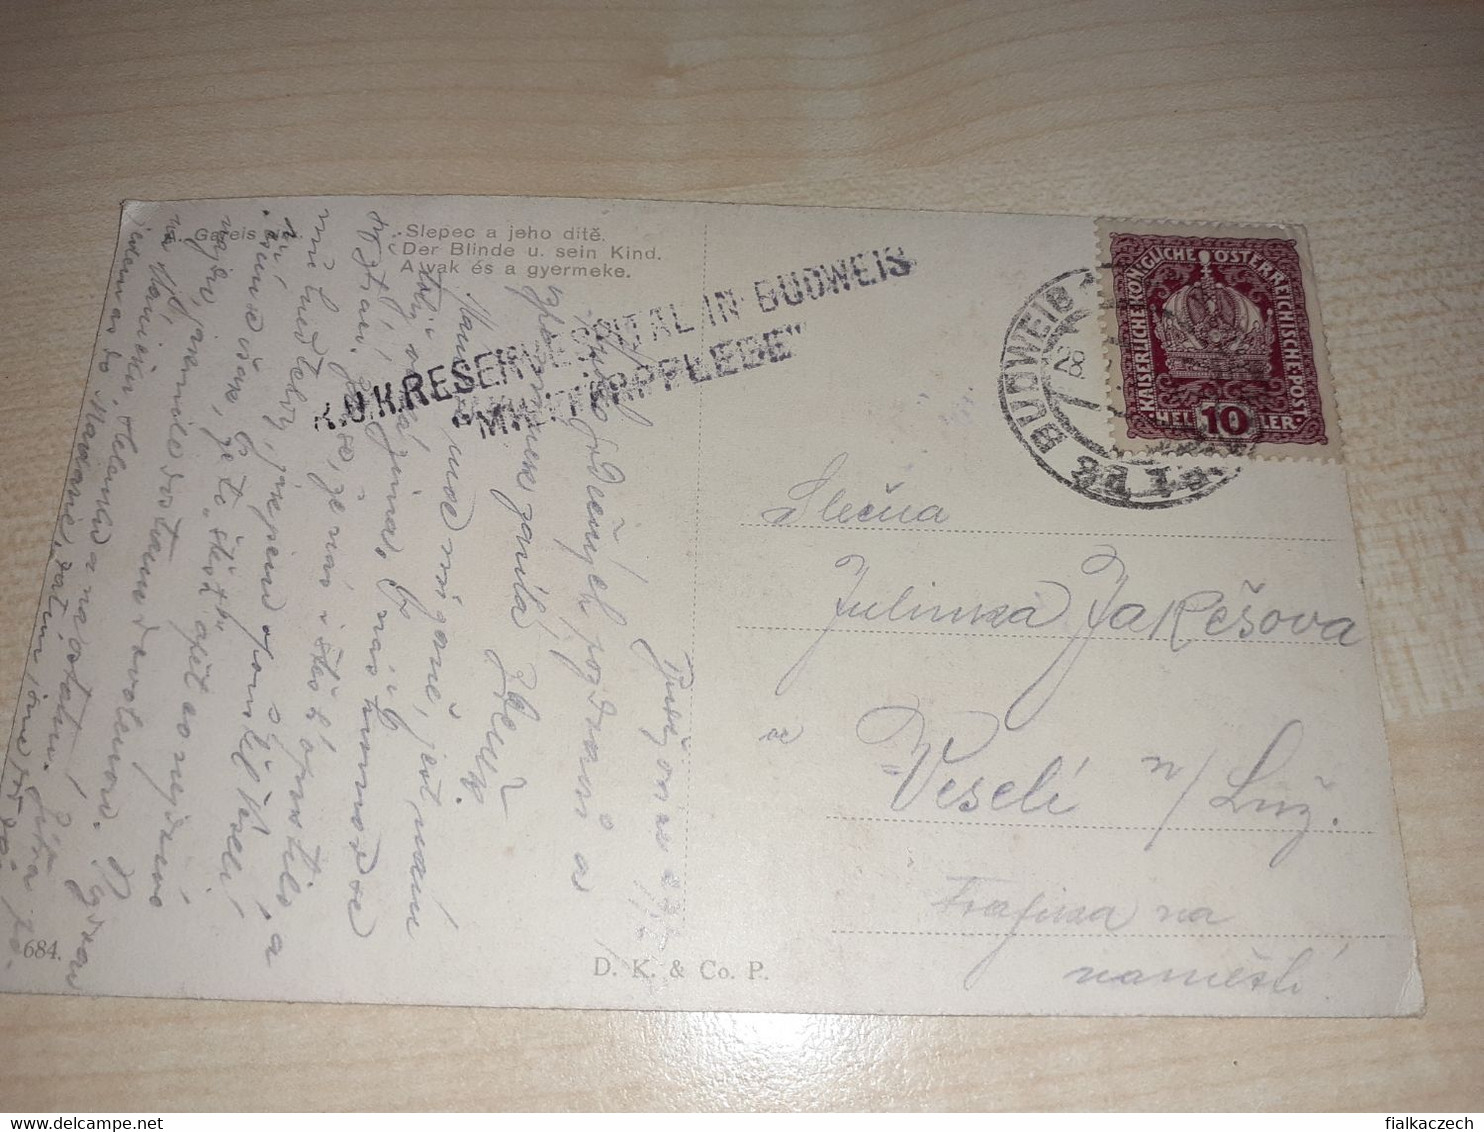 Postcard - Blinde Und Sein Kind, 1917, WWI., Stamp Budweis, Budějovice, Militarpflege In Budweis, Reservespital - ...-1918 Prephilately